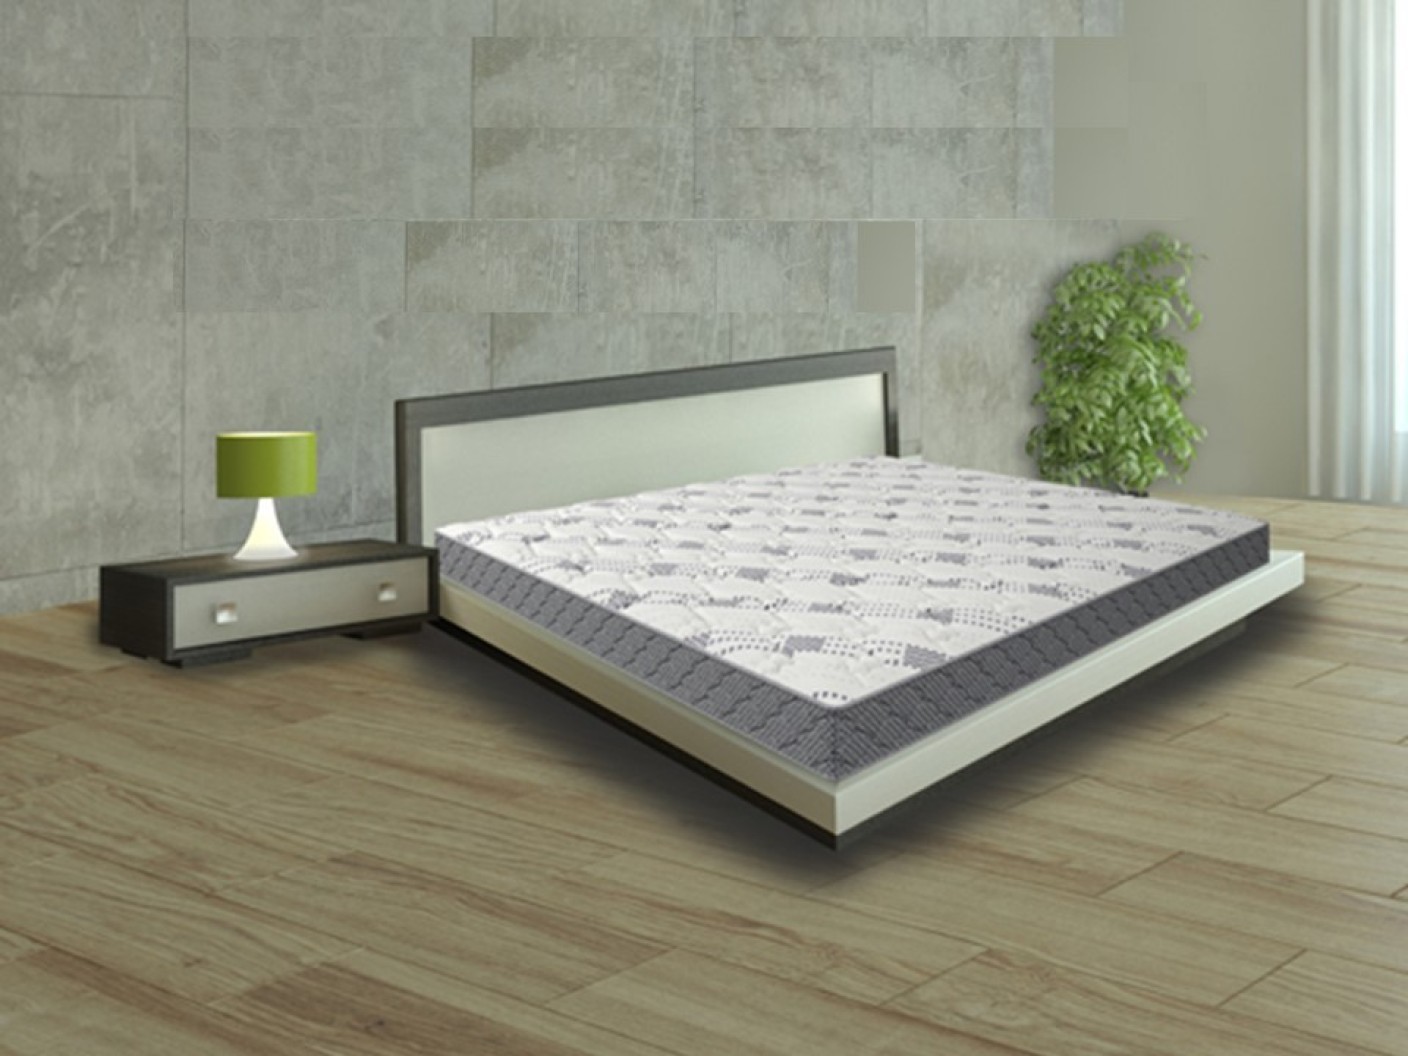 sleepwell king size mattress price in india